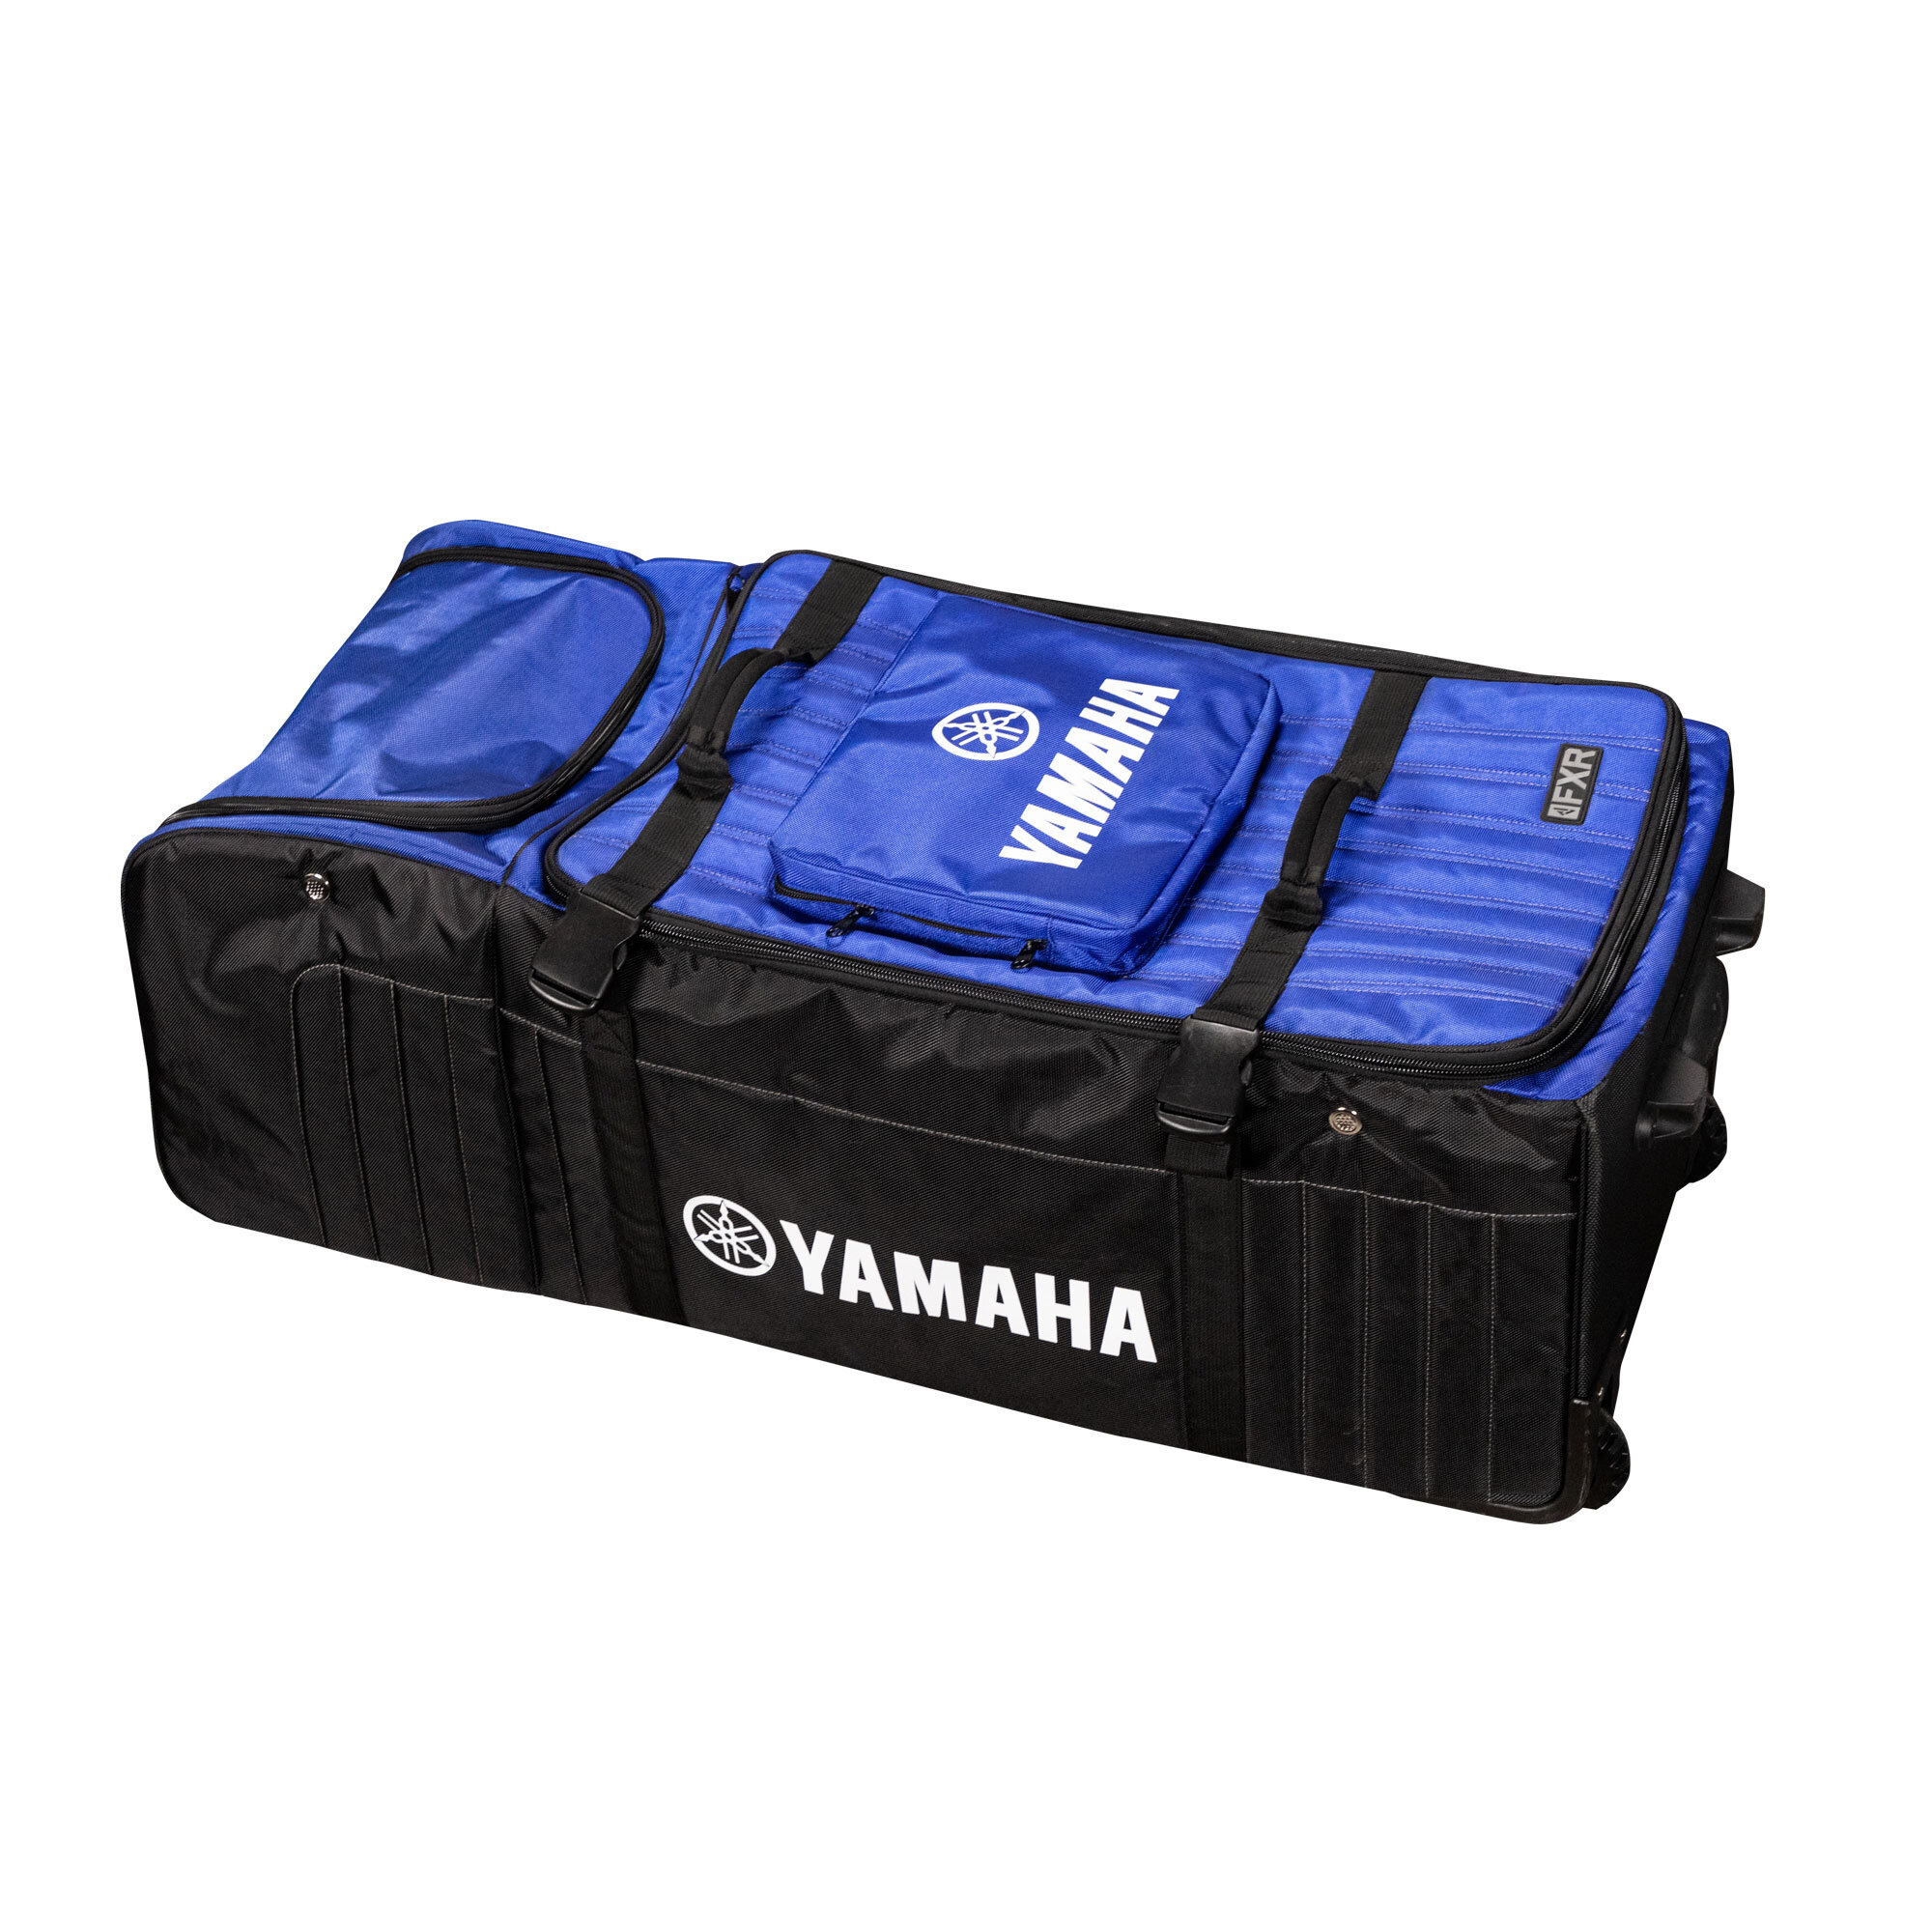 Yamaha Large Gear Bag